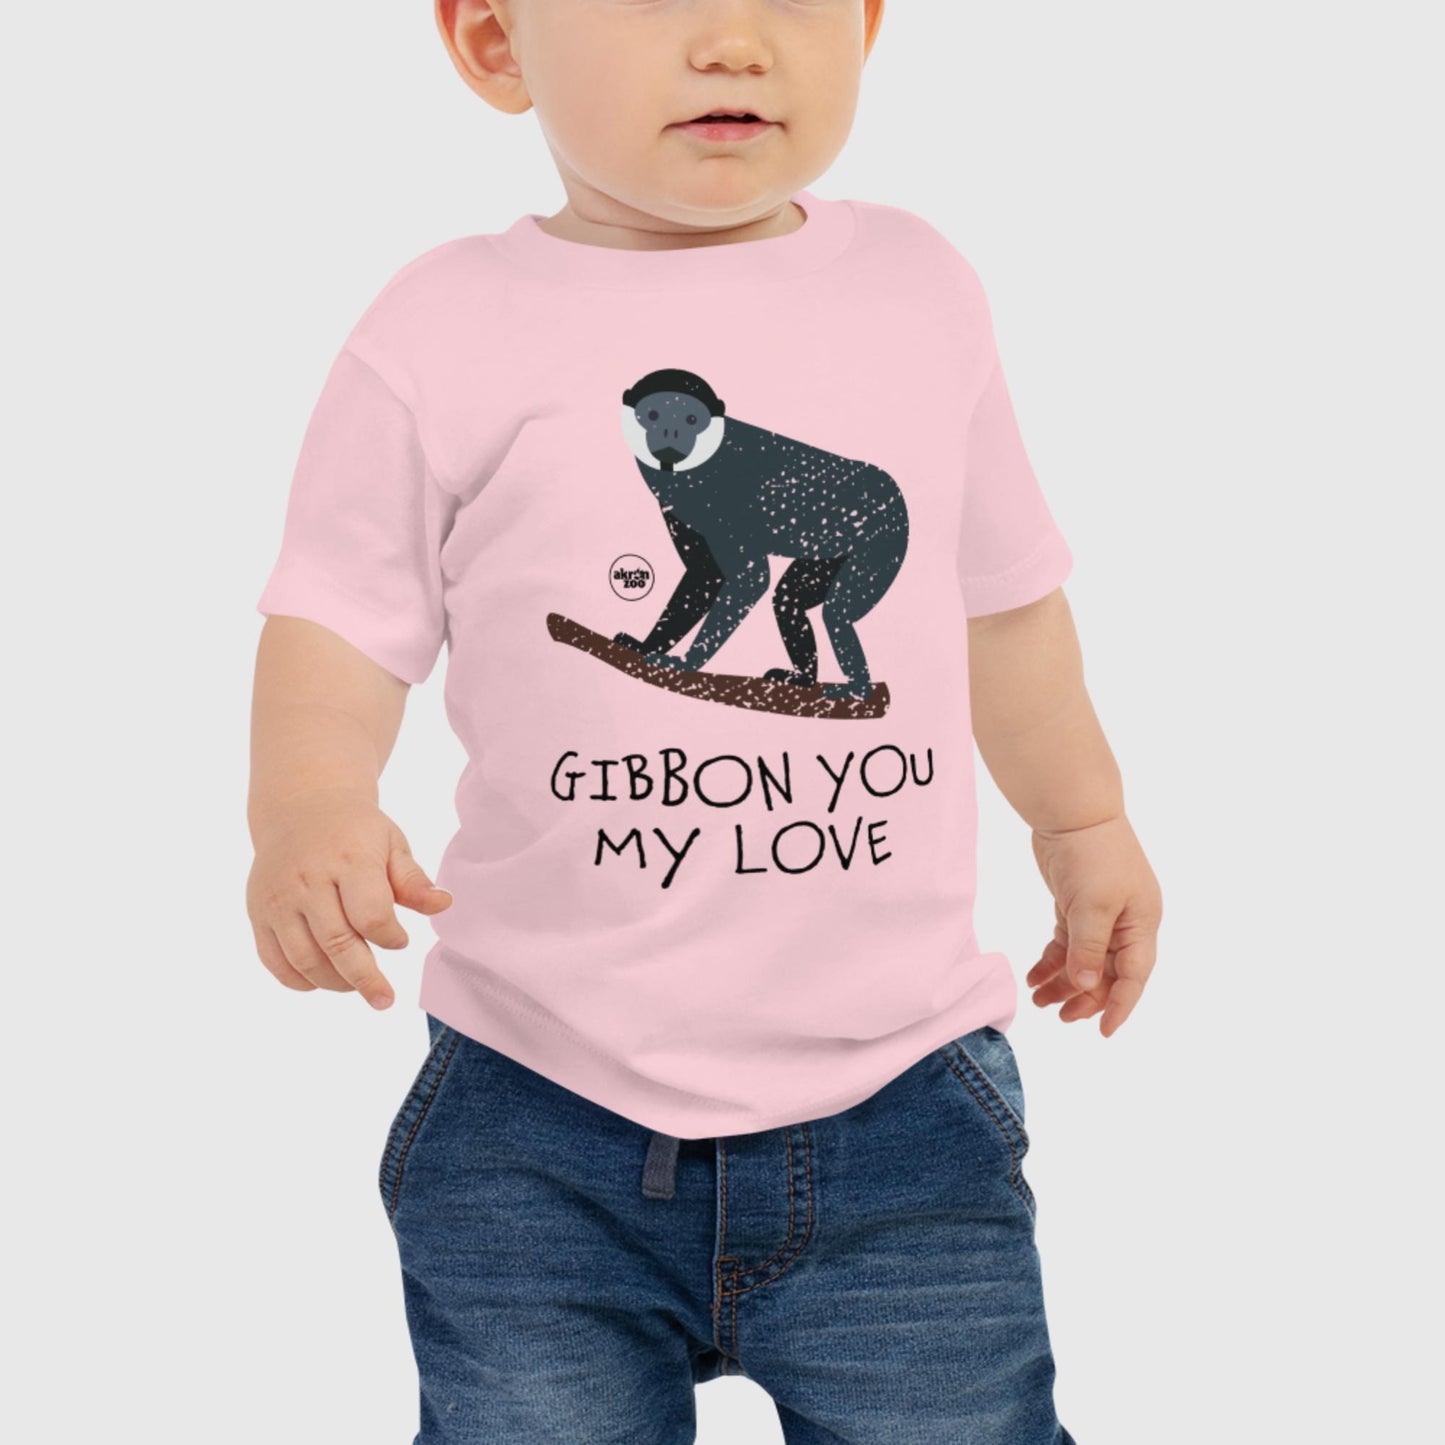 Simply Wild - Gibbon You My Love - Baby Tee